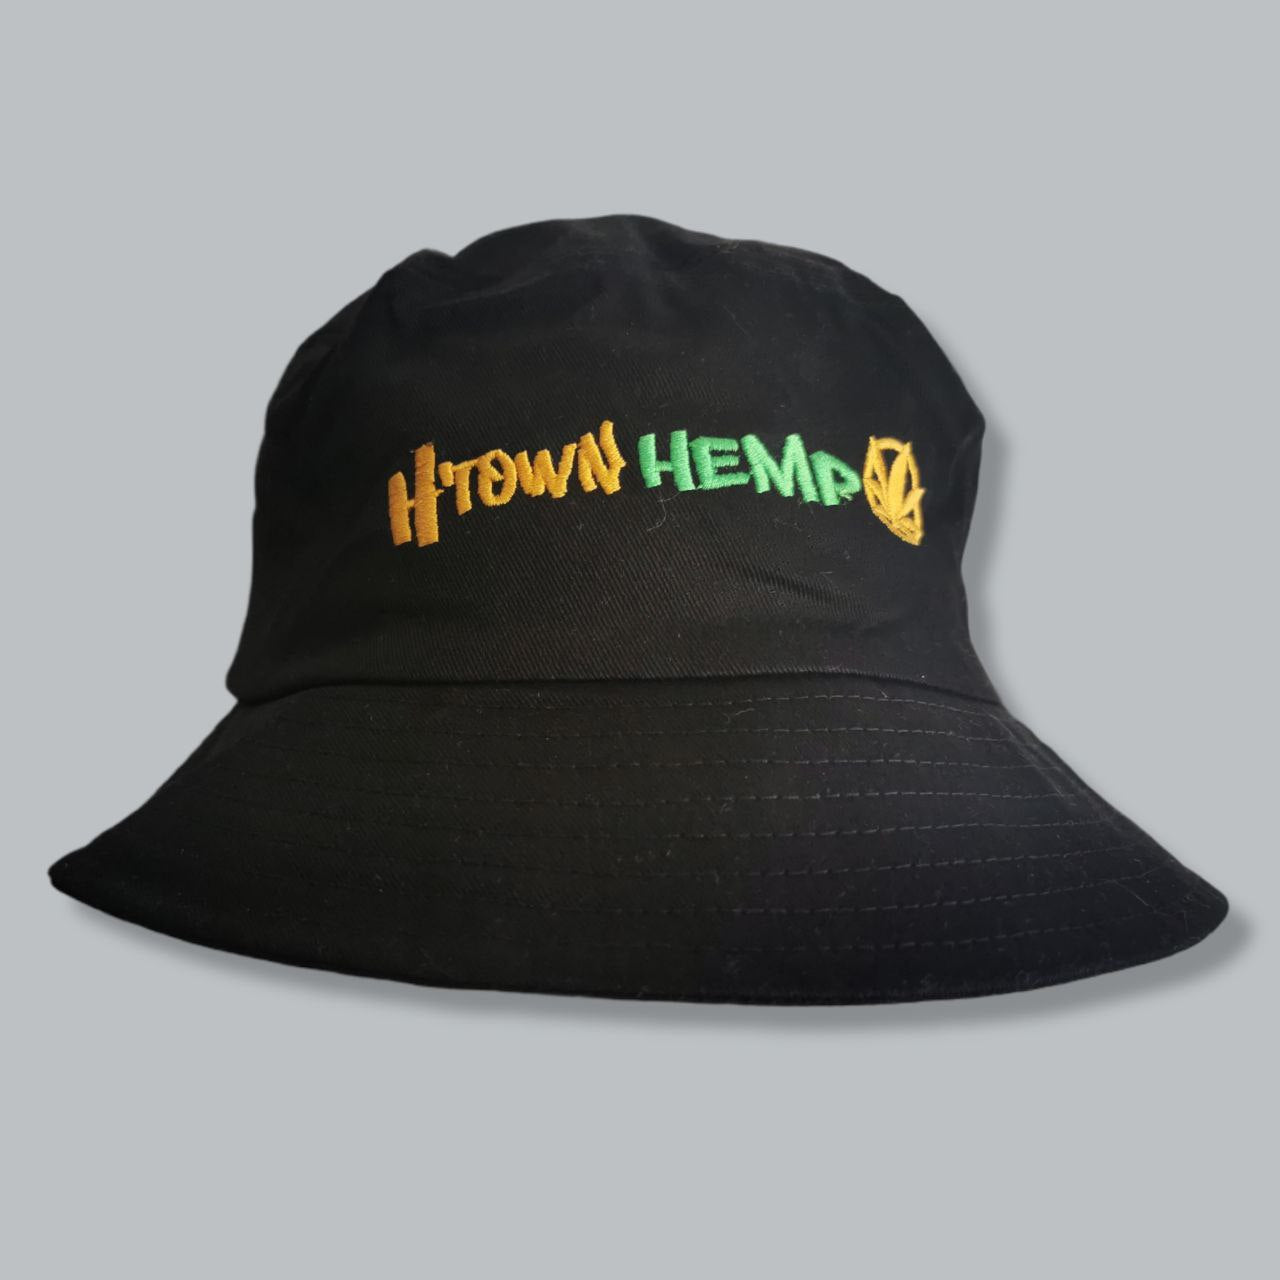 Bucket Hat H-Town Hemp Logo